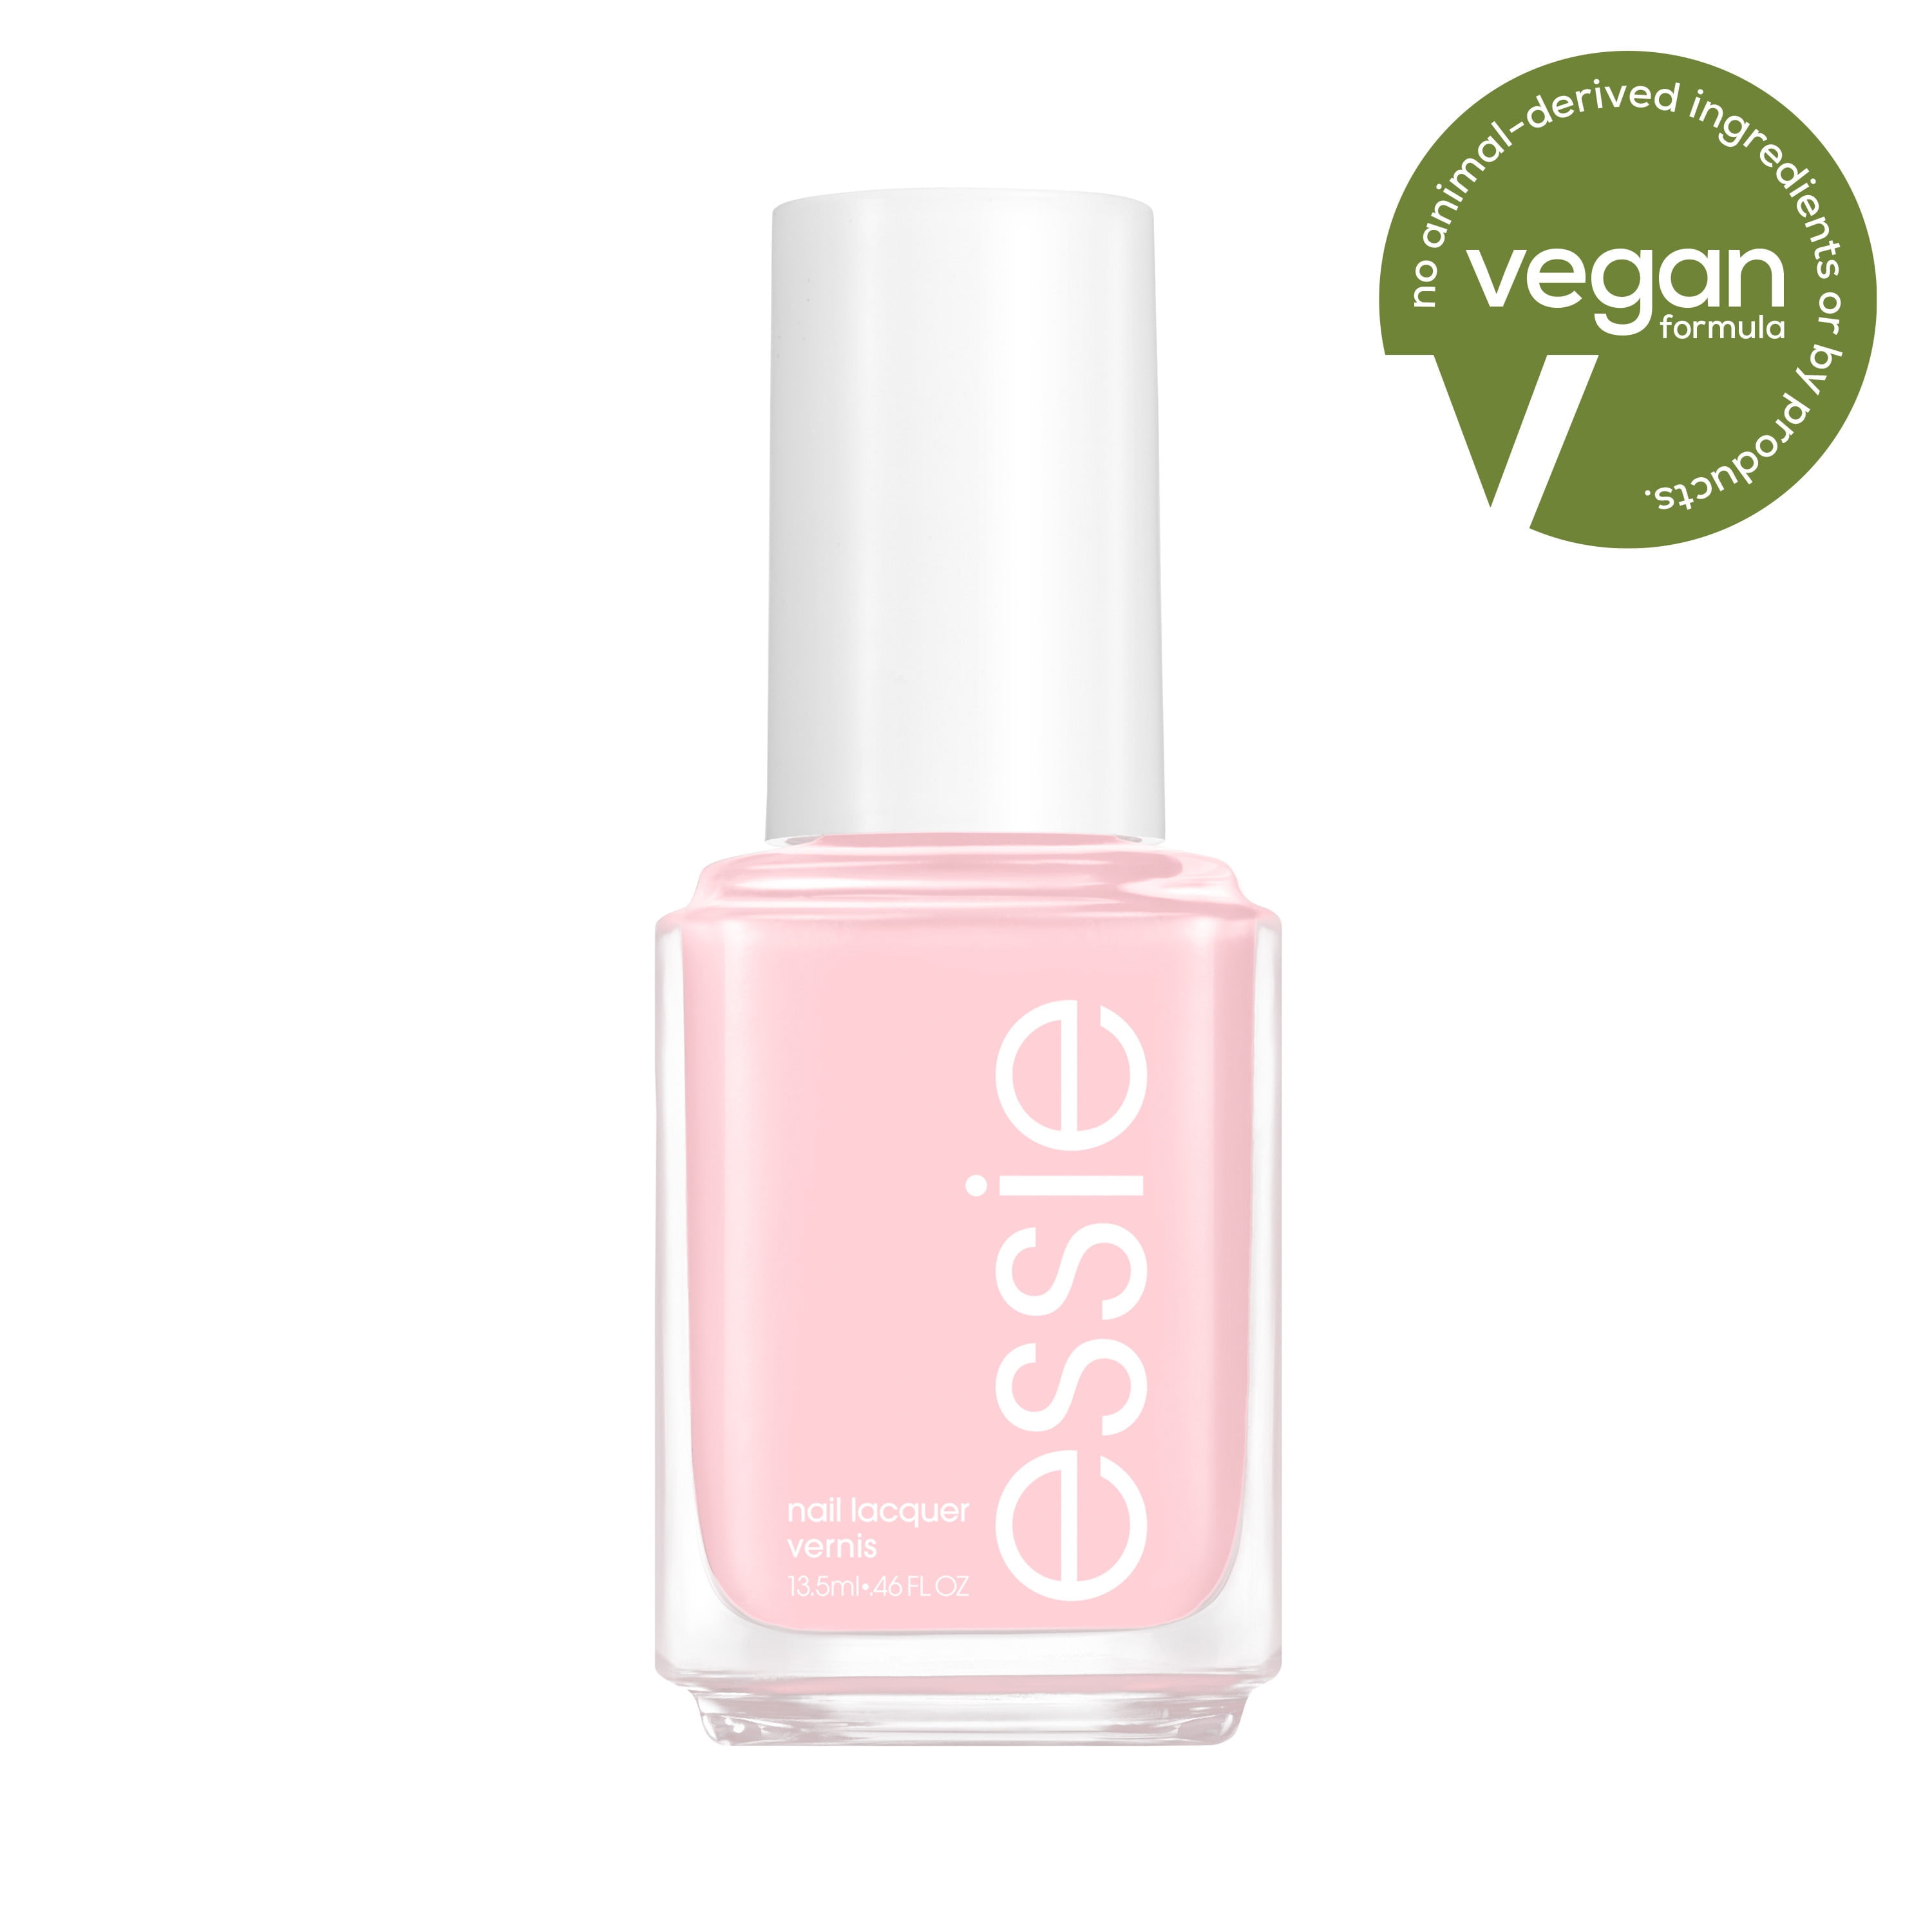 kom videre en anden Oh essie Salon Quality 8 Free Vegan Nail Polish, Sheer Light Pink, 0.46 fl oz  Bottle - Walmart.com